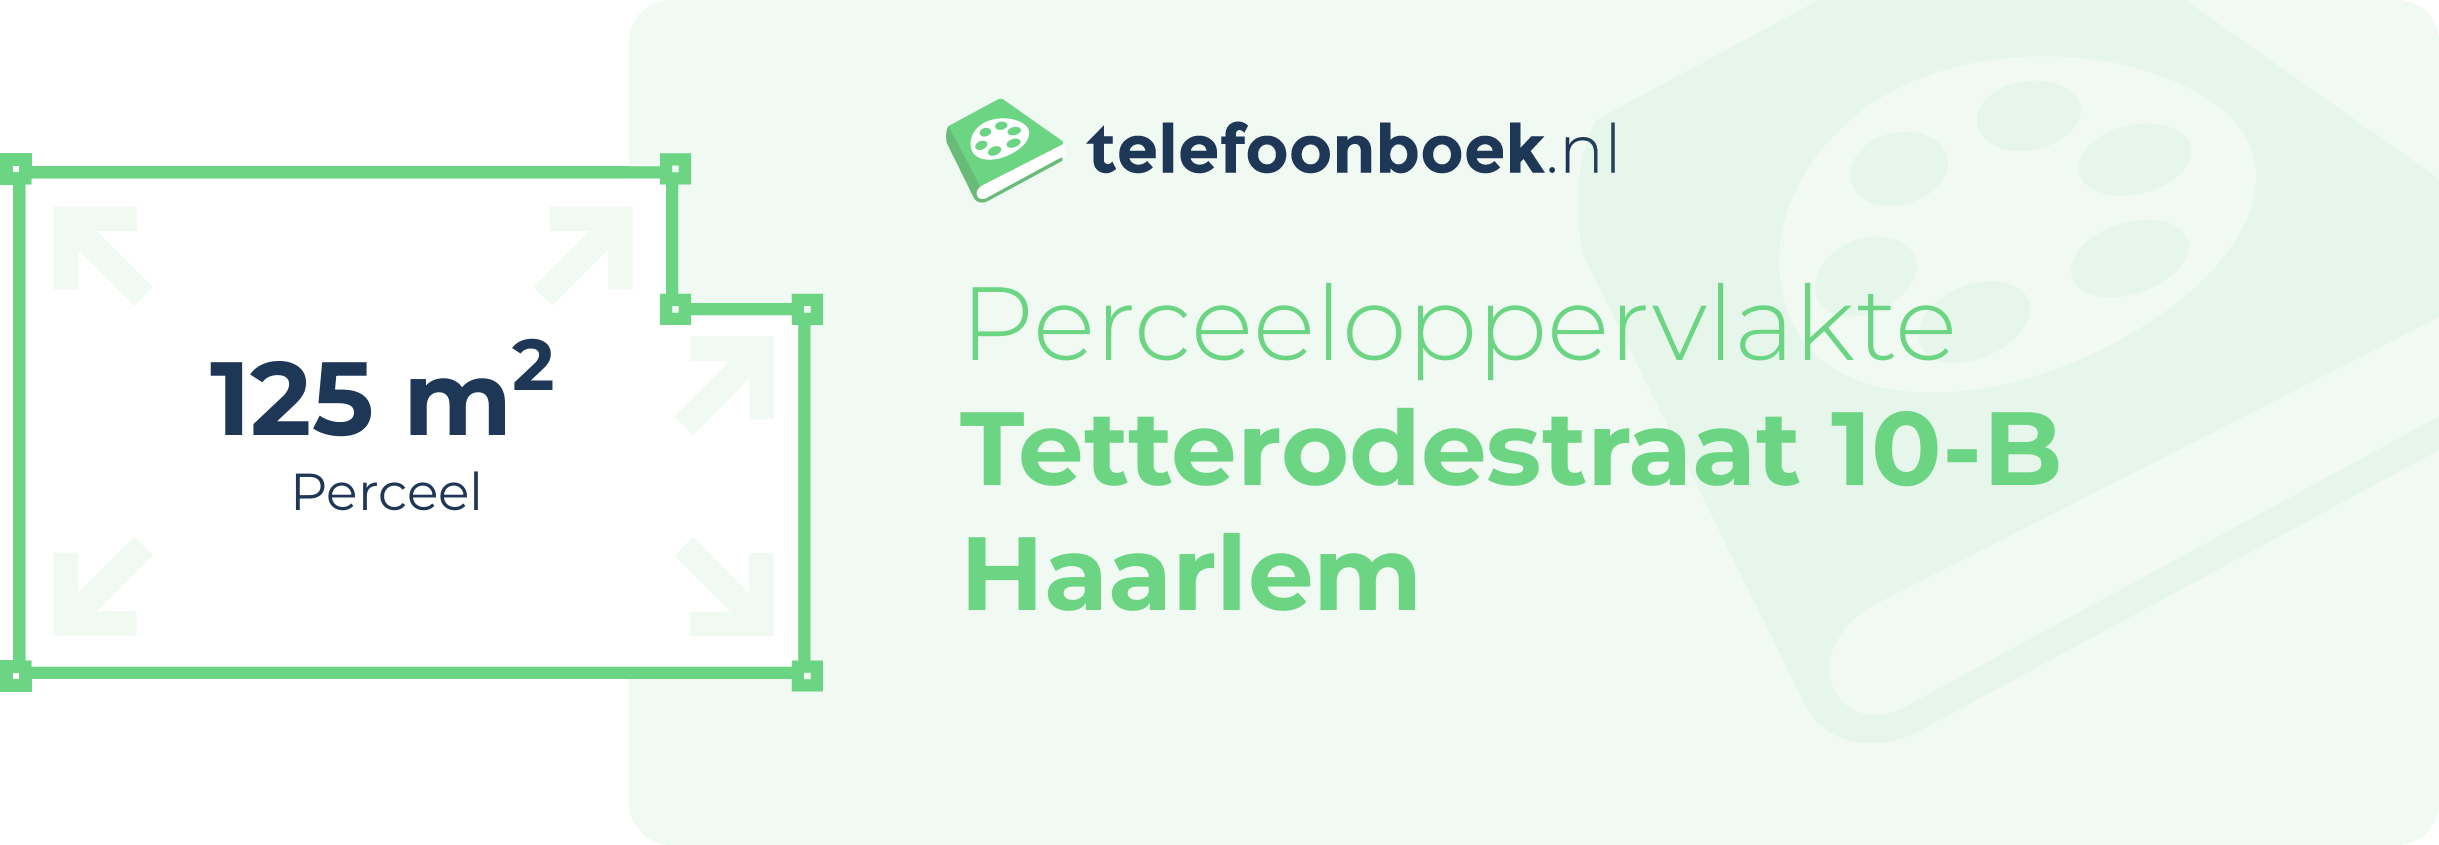 Perceeloppervlakte Tetterodestraat 10-B Haarlem